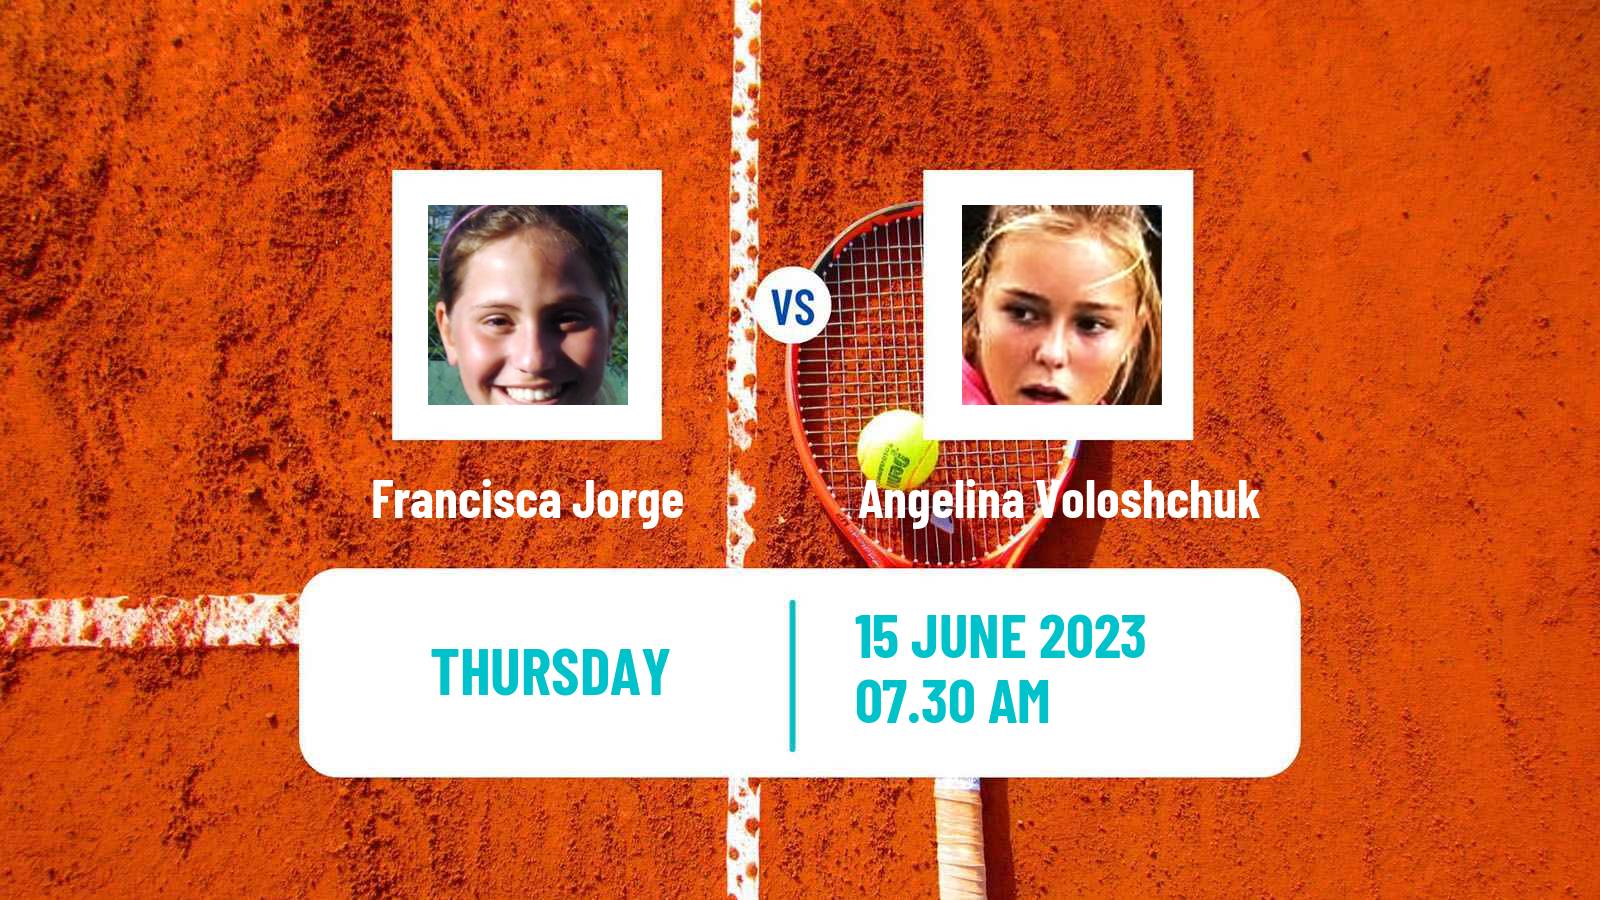 Tennis ITF W25 Guimaraes Women Francisca Jorge - Angelina Voloshchuk